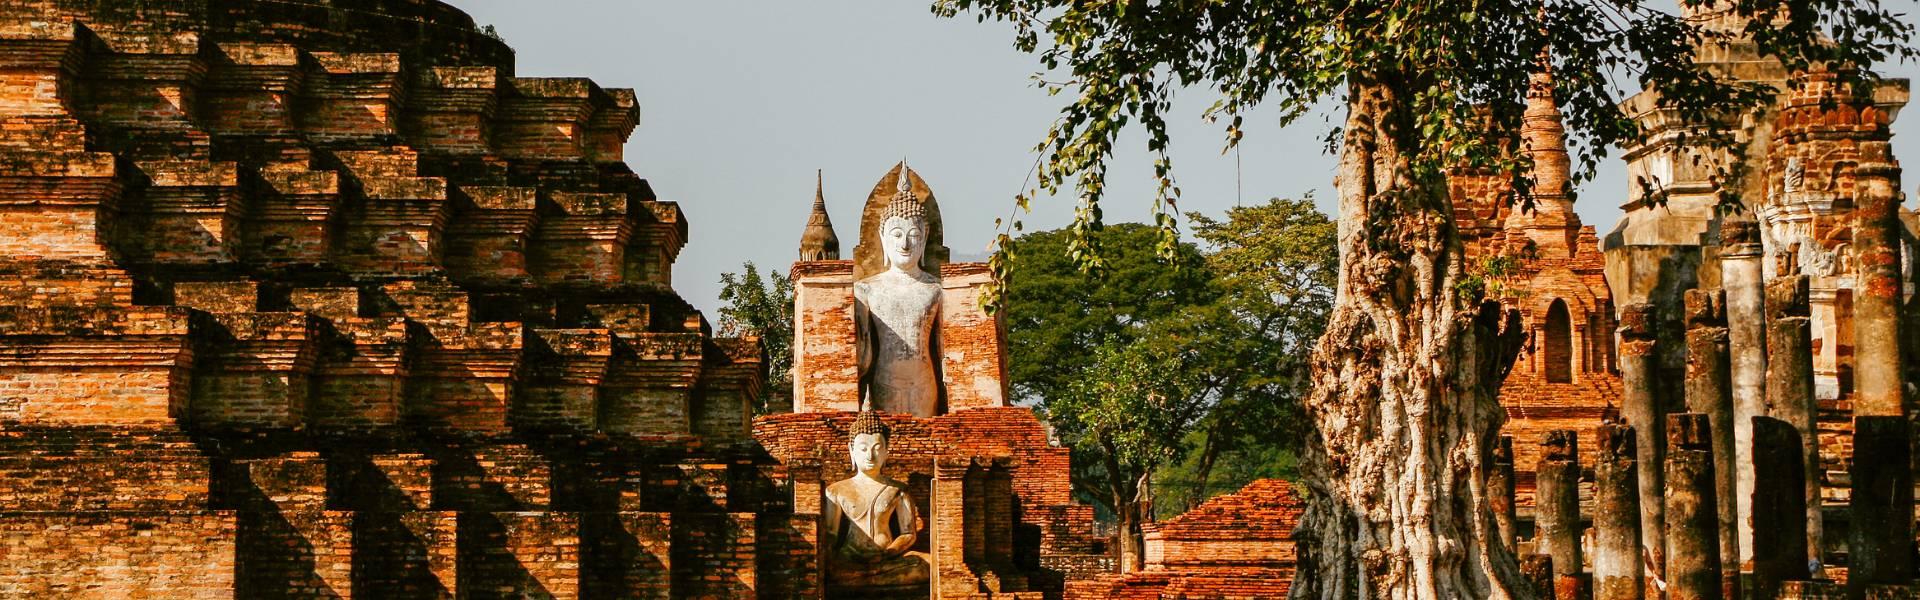 Guide de voyage d'Ayutthya | Voyage en Thaïlande avec Asiatica Travel